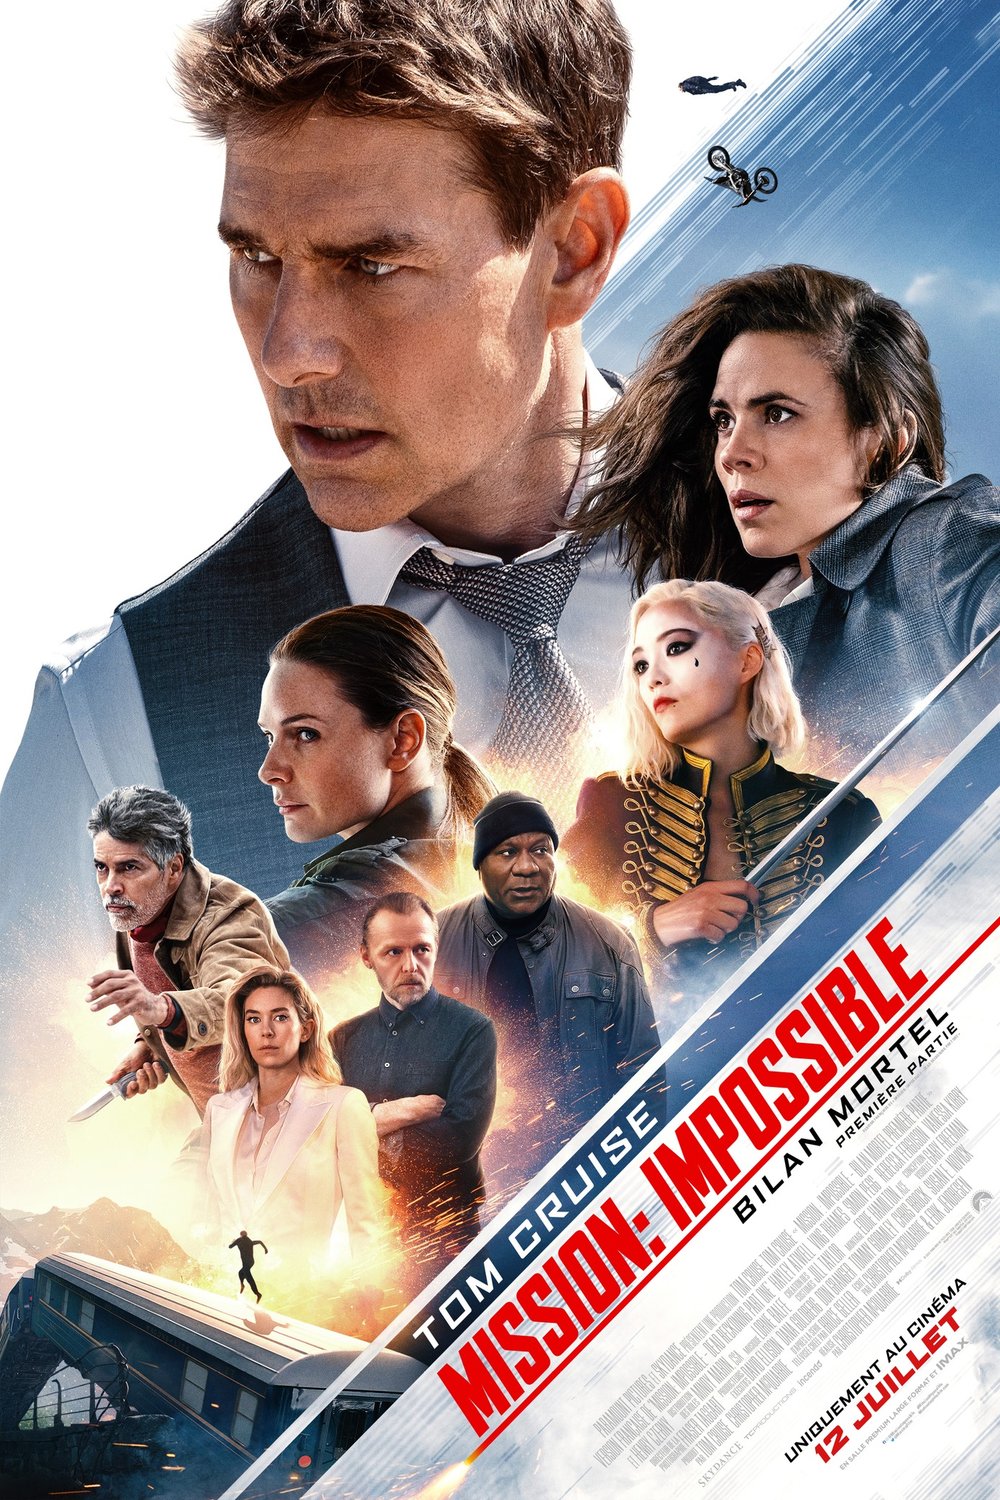 Poster of the movie Mission: Impossible - Bilan mortel - Première partie